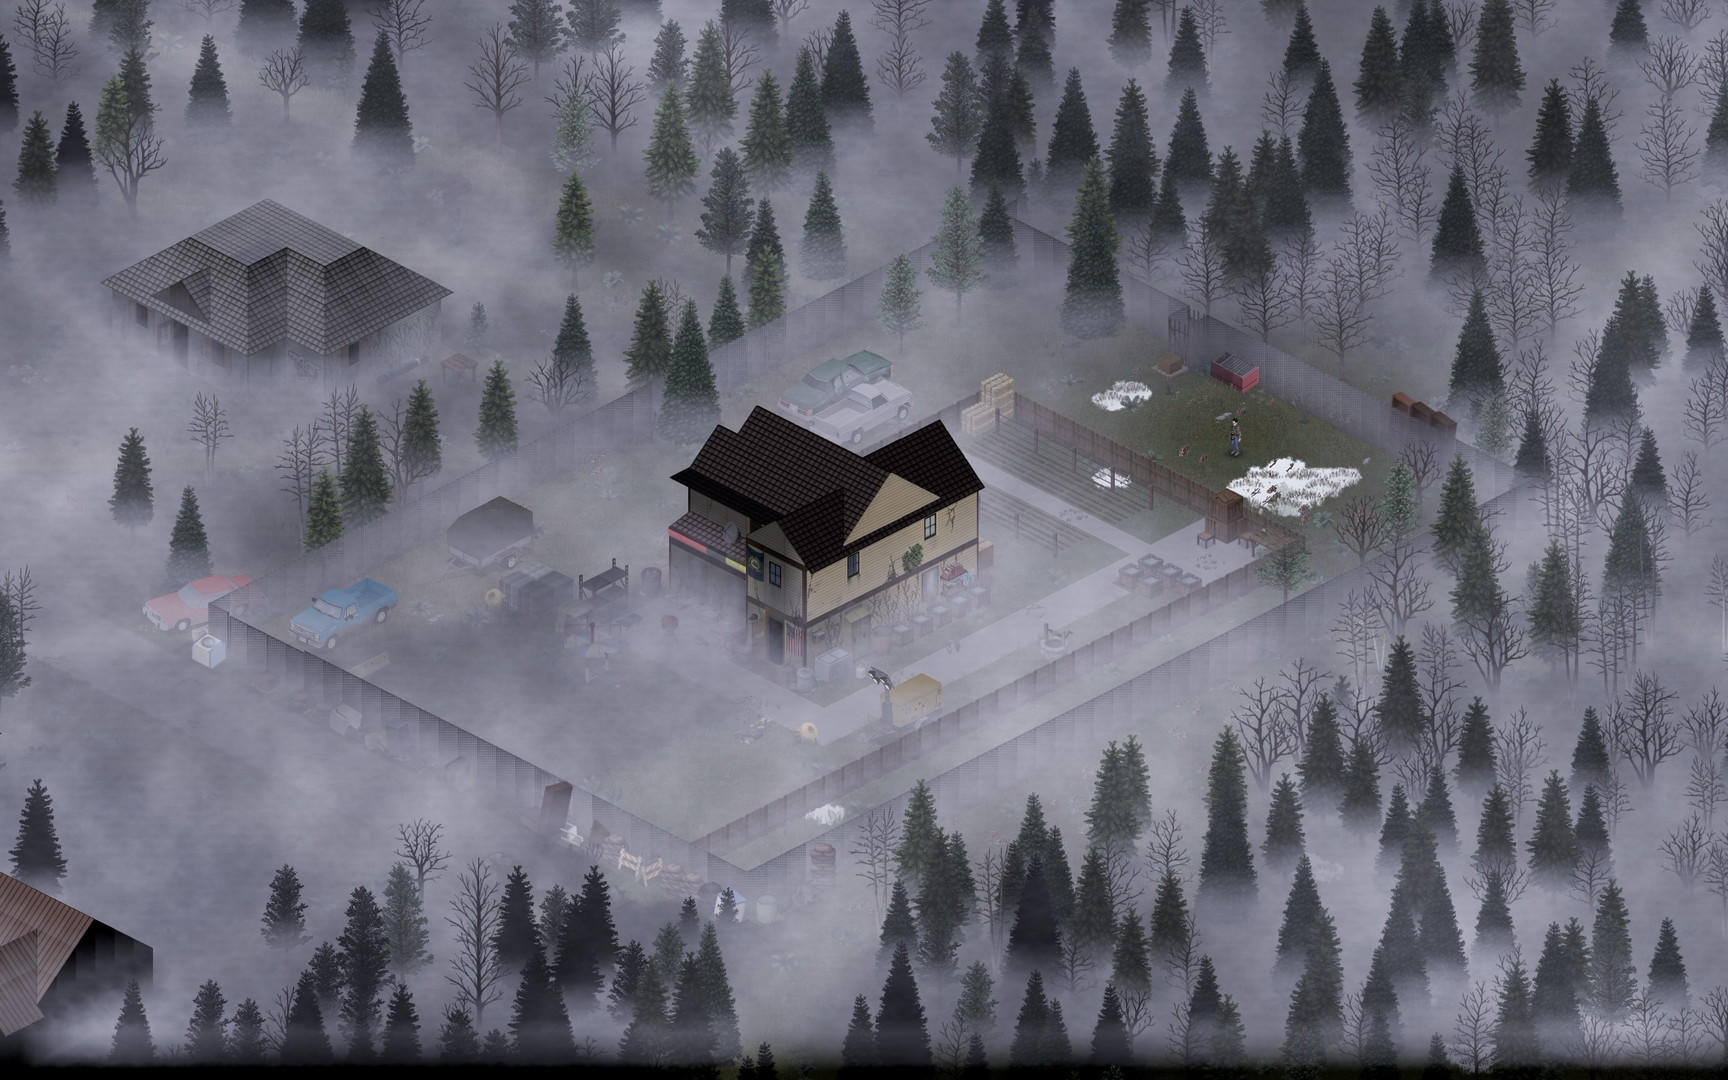 Project Zomboid screenshot game